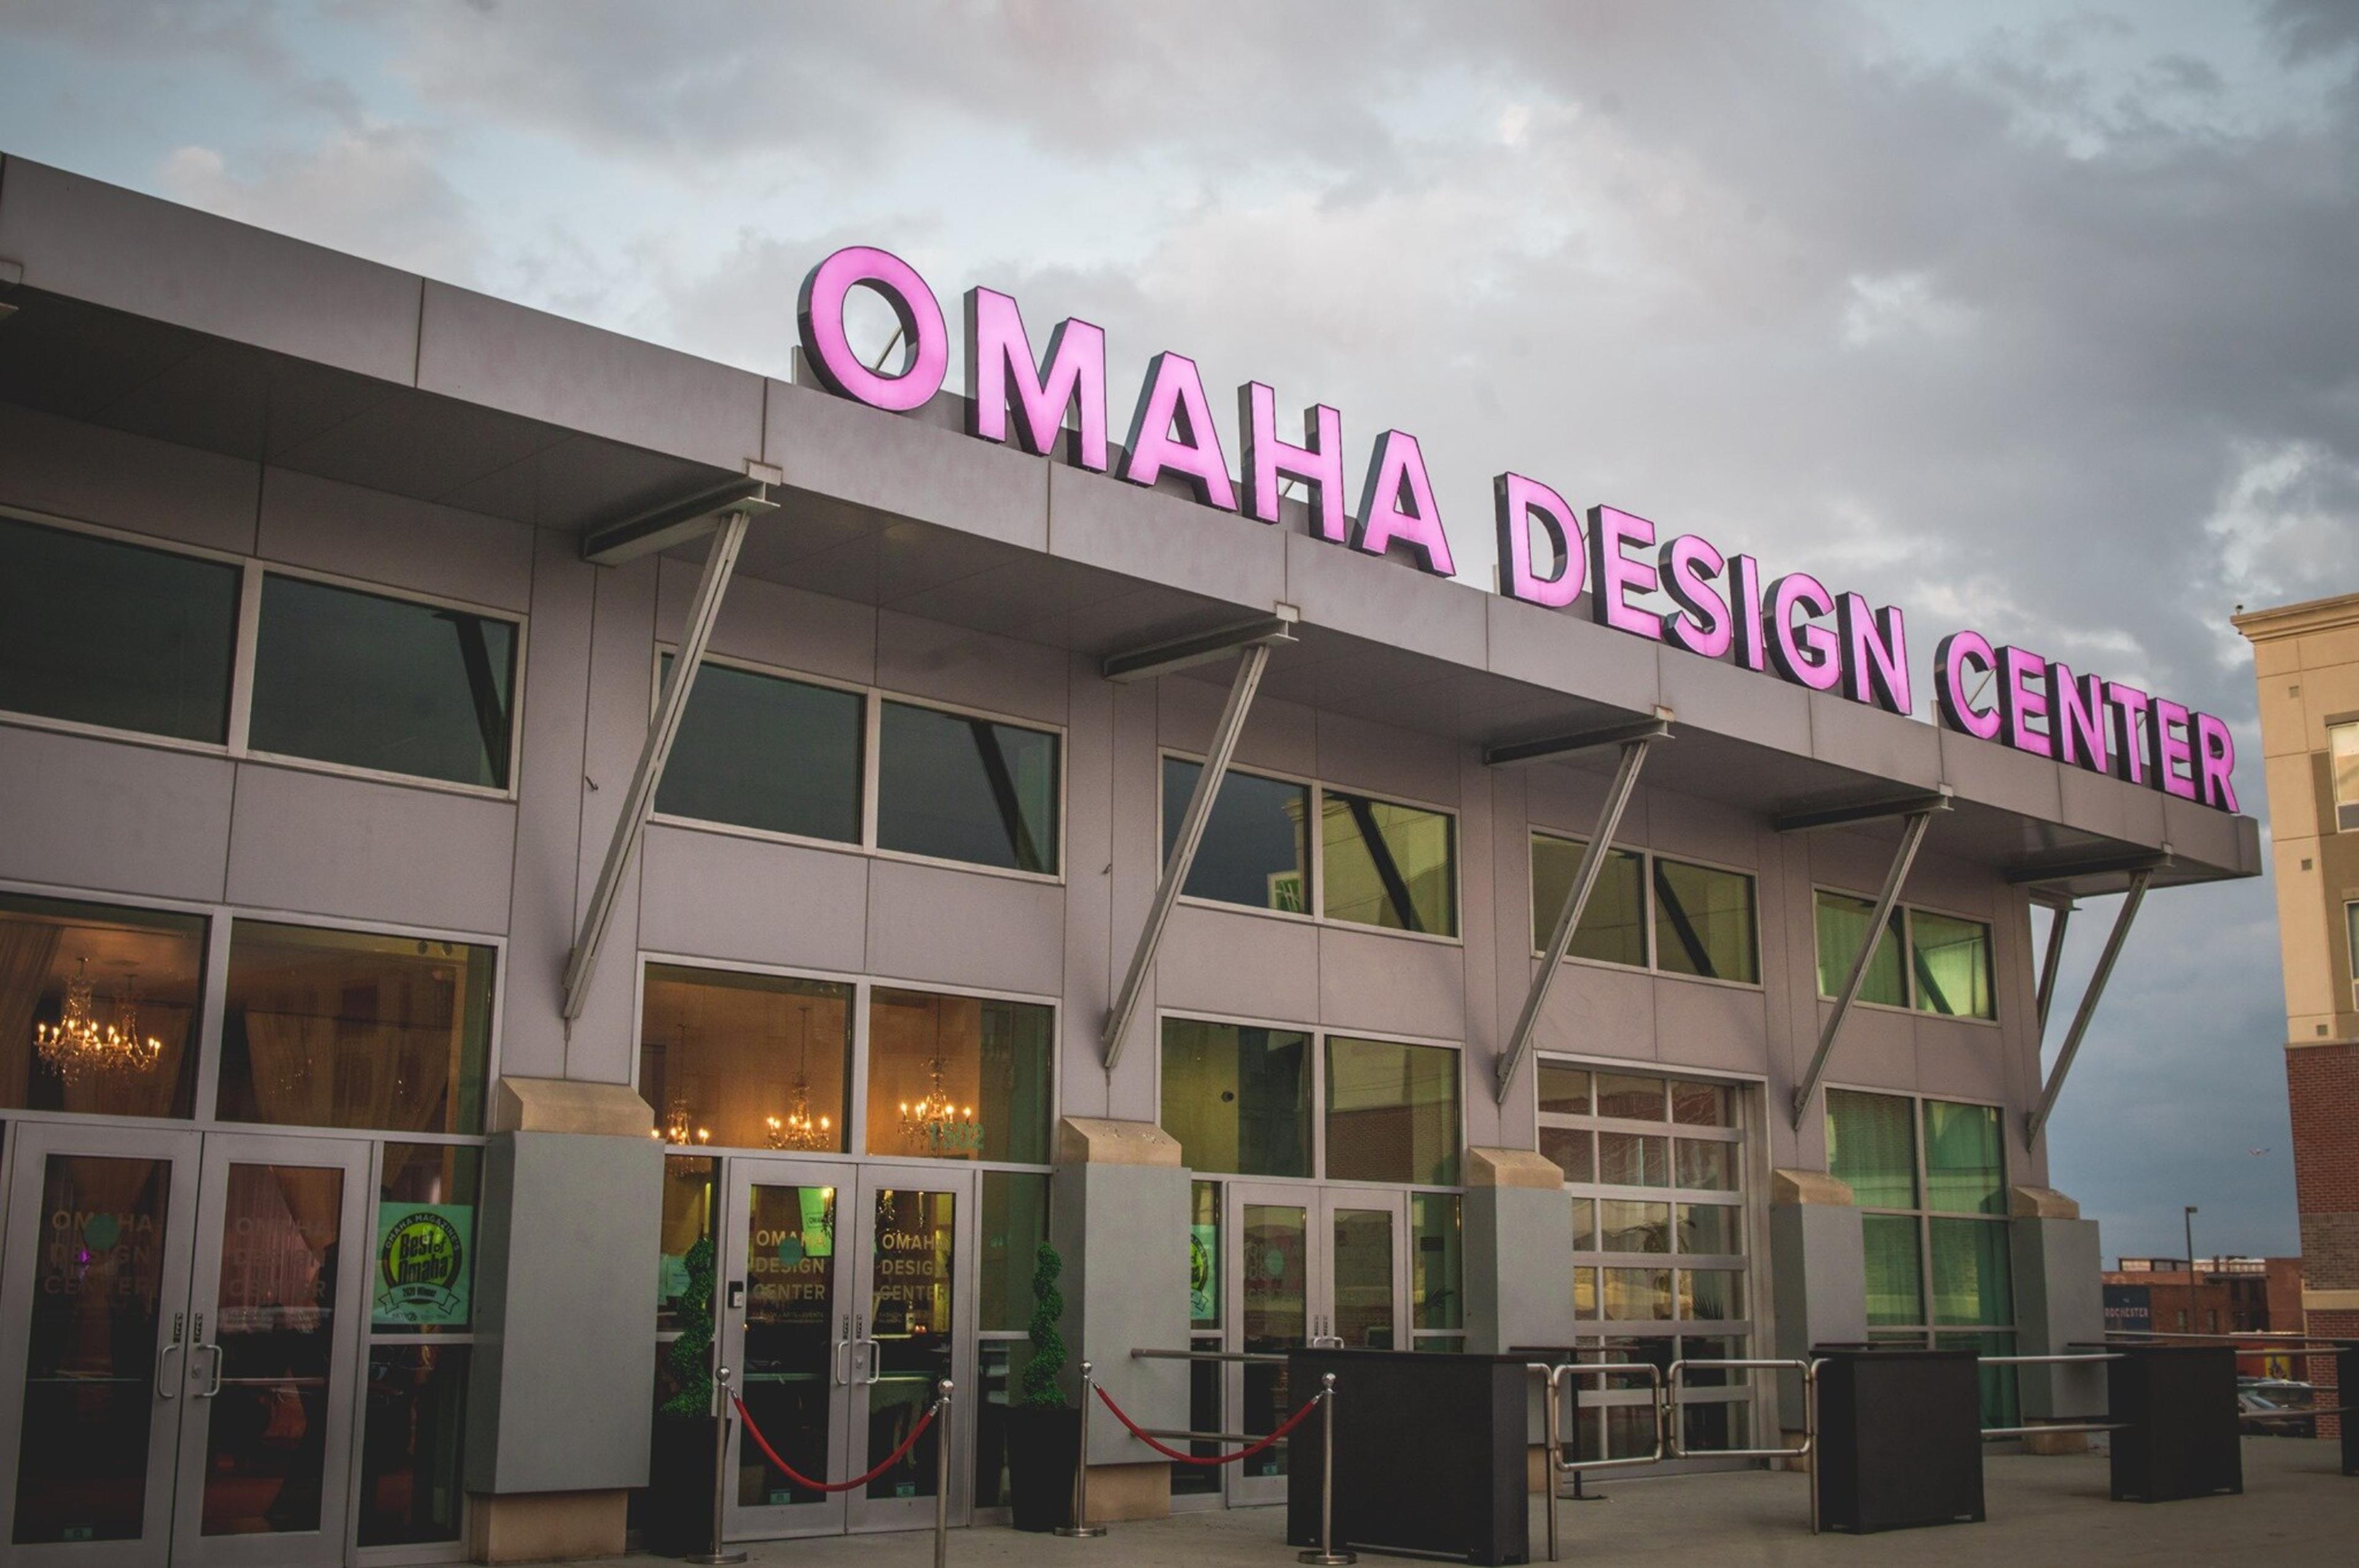 Omaha Design Center